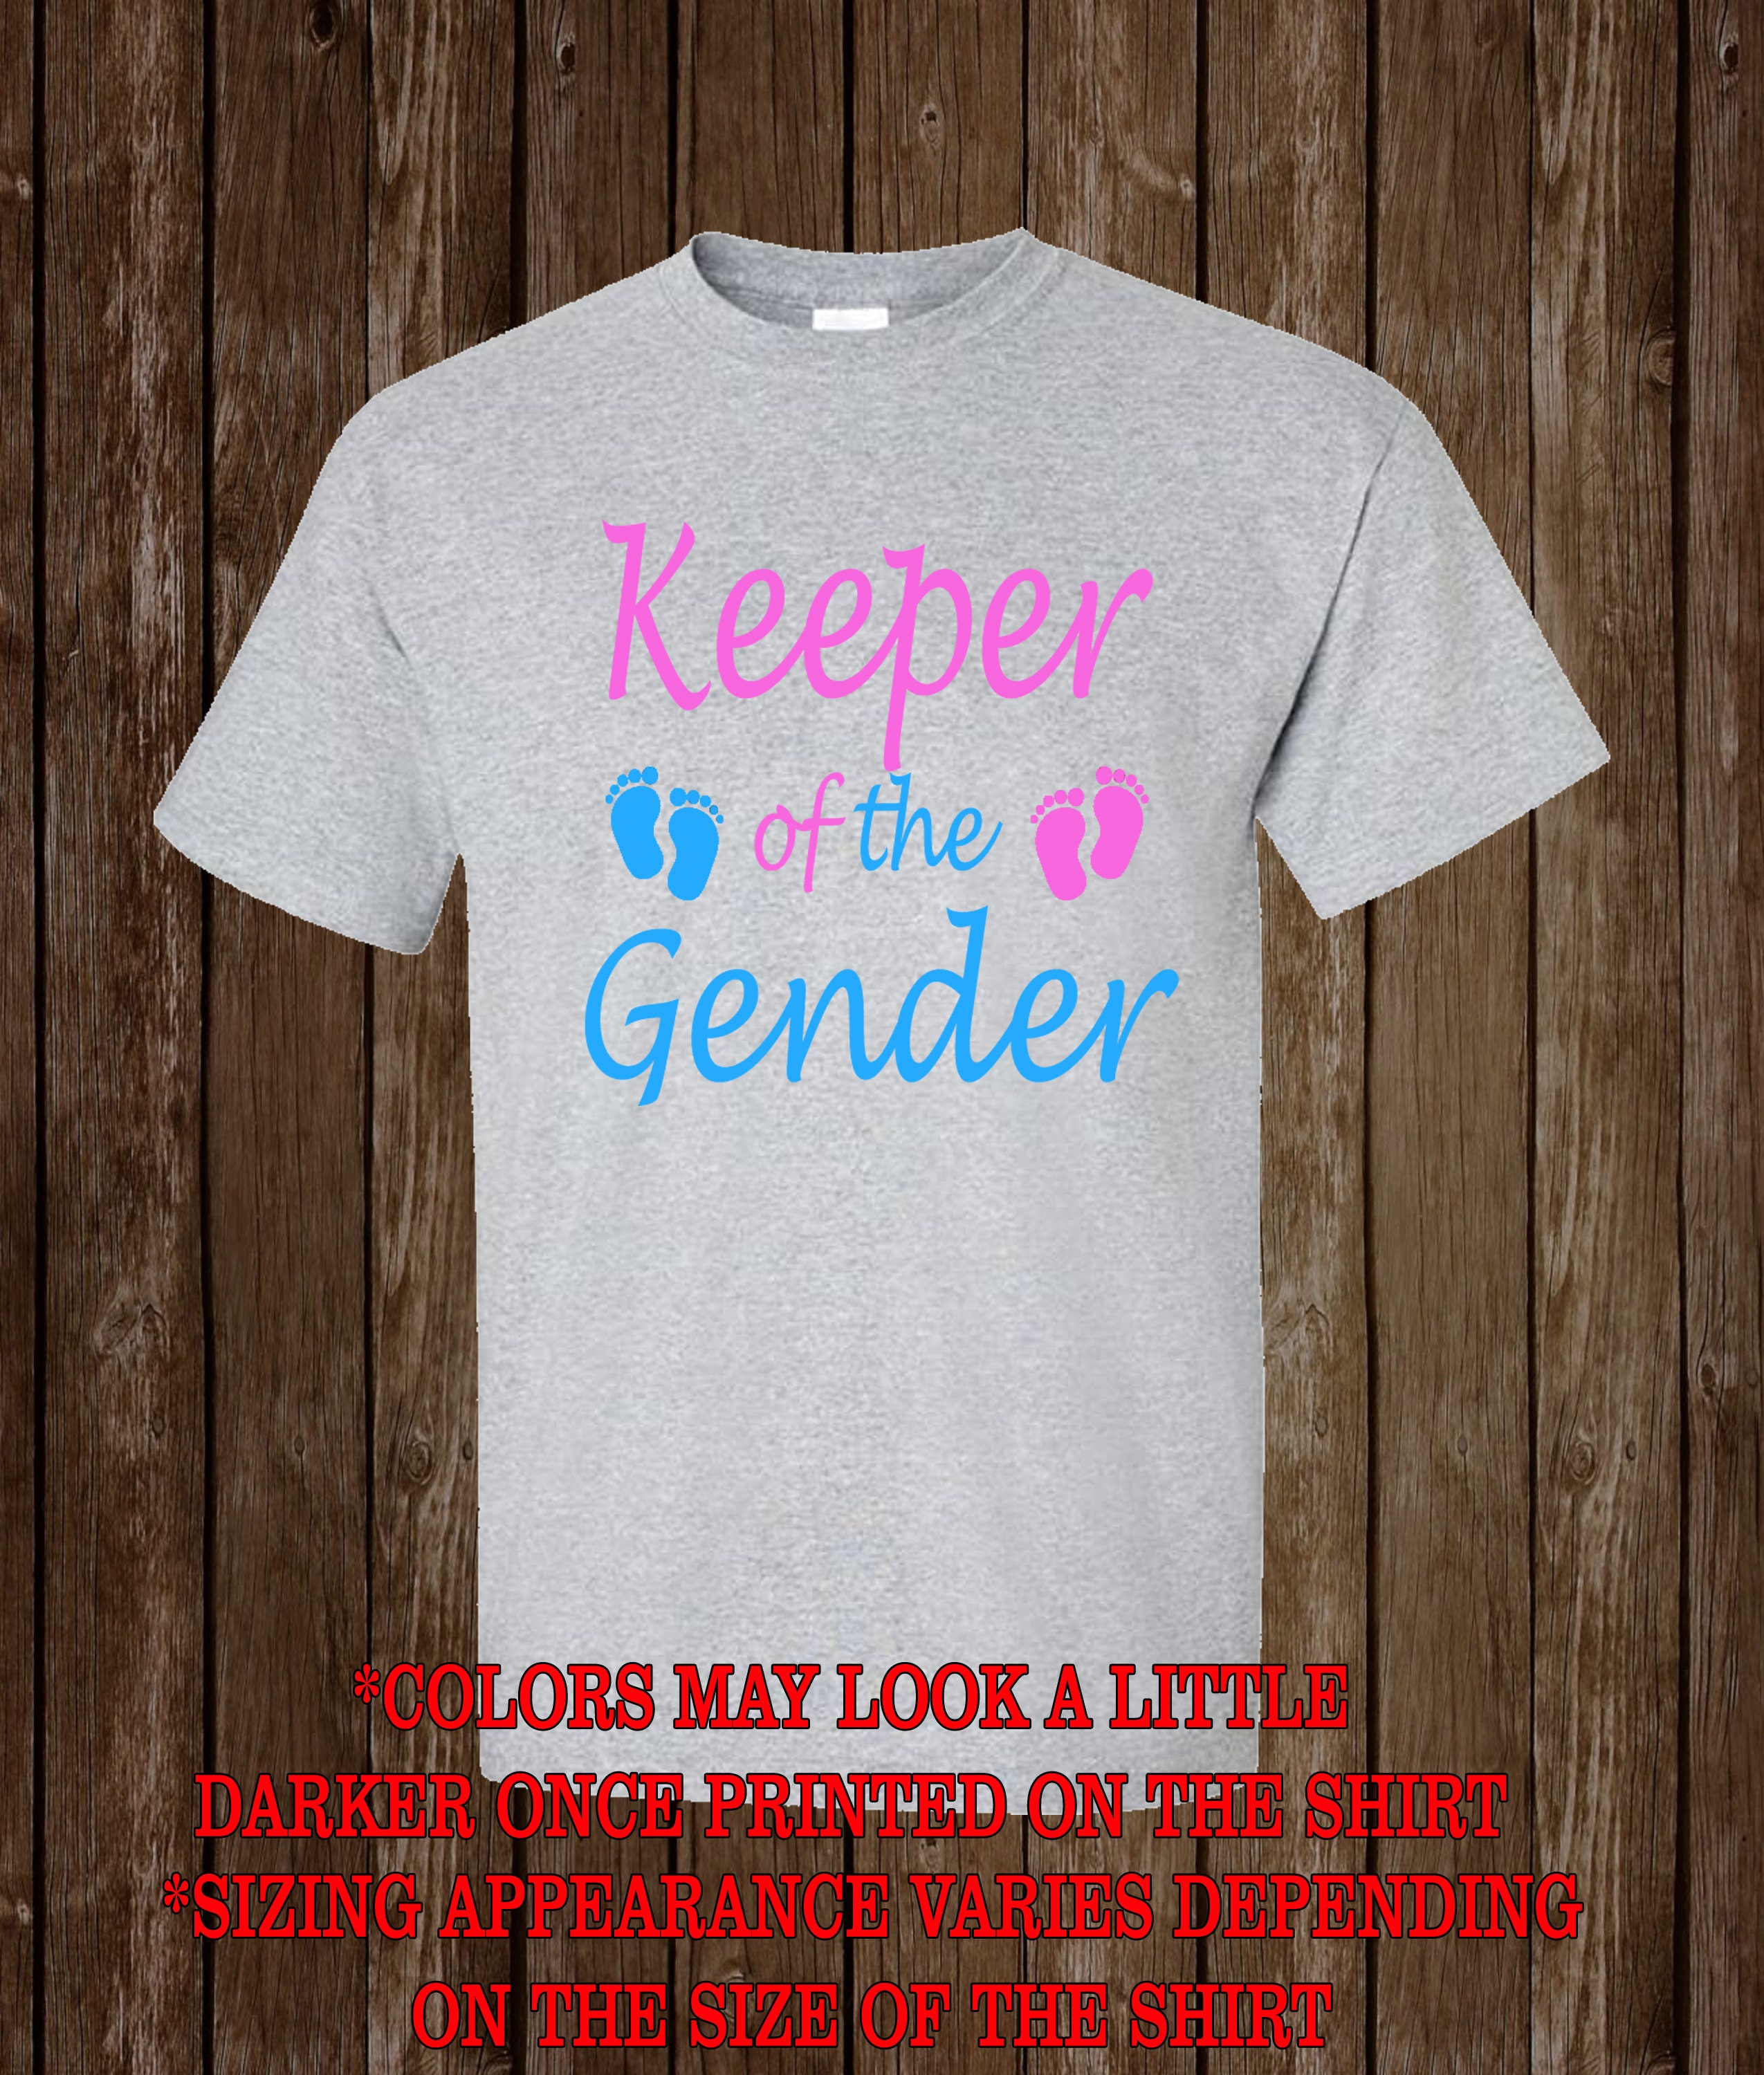 Keeper of the Gender Shirt Gender Reveal Shirt Boy or Girl Shirt 